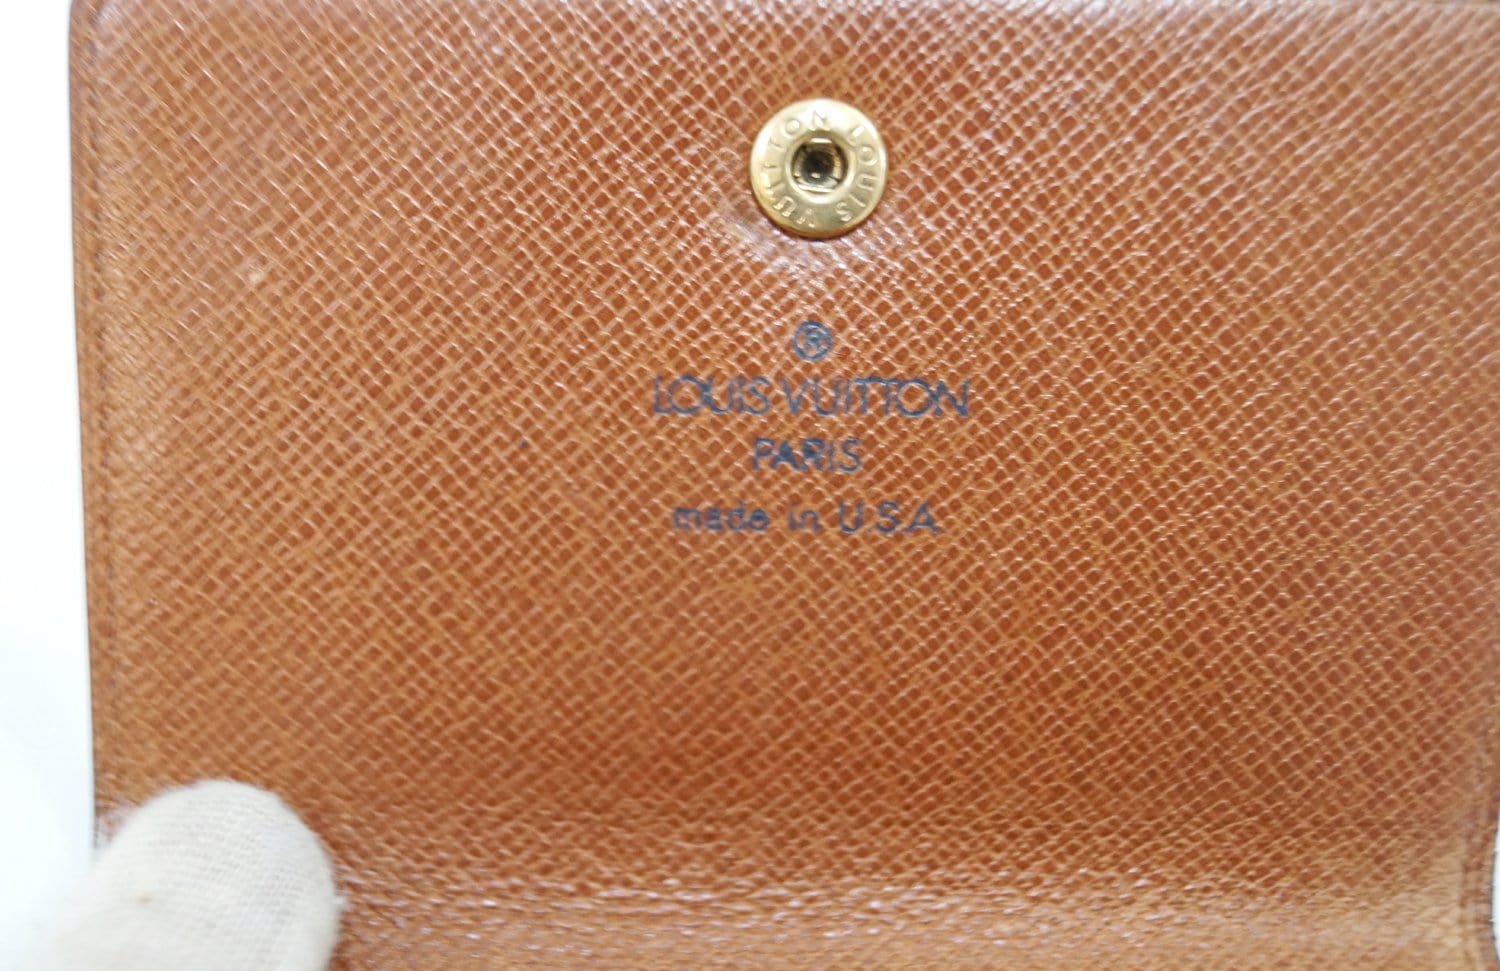 Louis Vuitton LOUIS VUITTON Bifold Wallet Compact Monogram Canvas/Leather  Brown x Navy Red Men's M63041 99551g